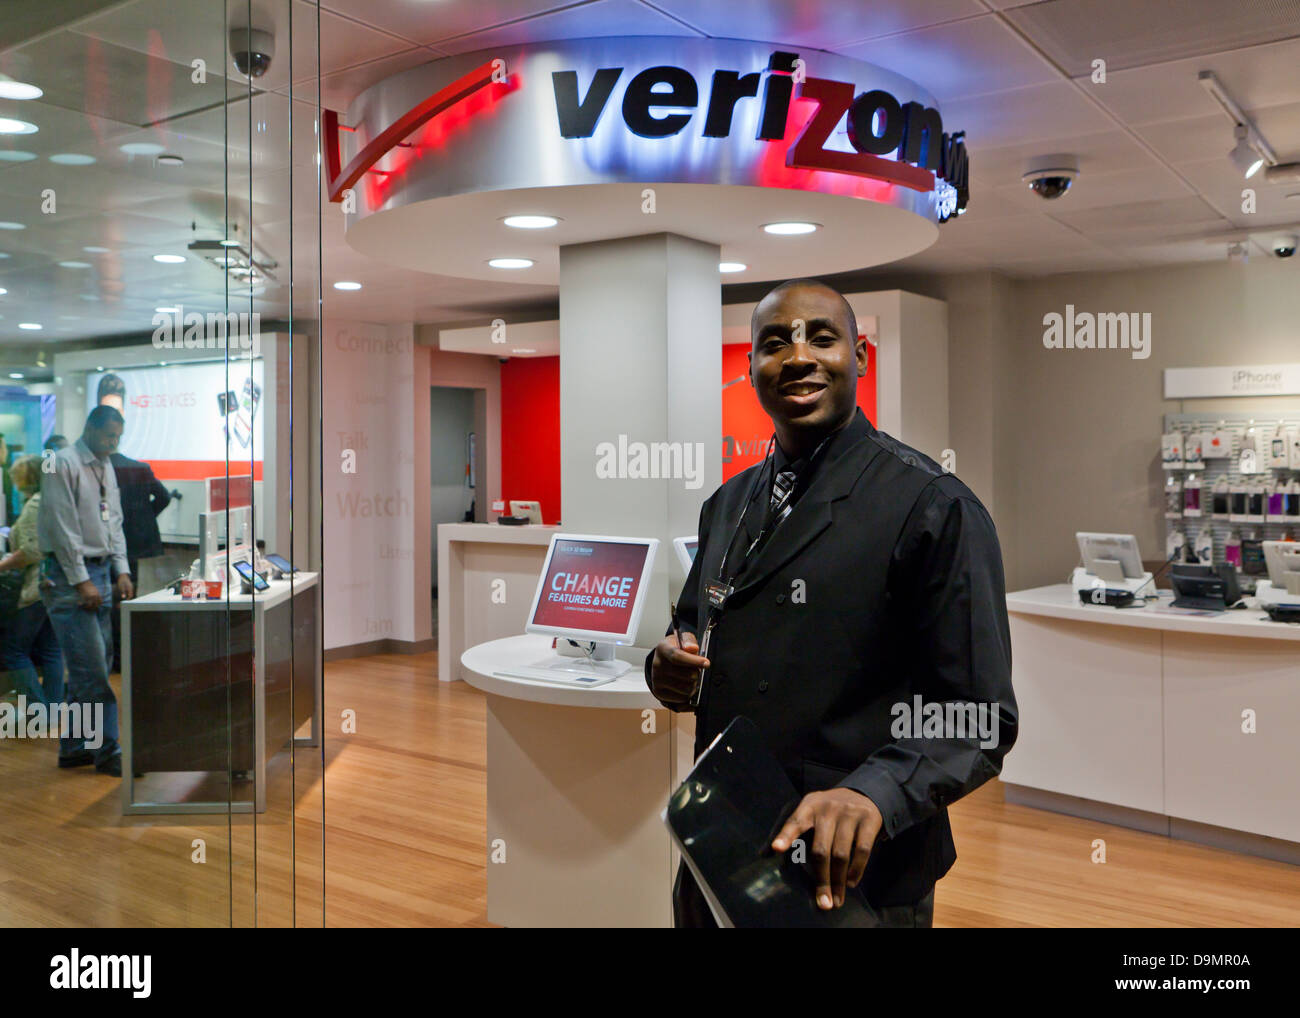 Verizon Wireless sales representative Stock Photo: 57620090 - Alamy